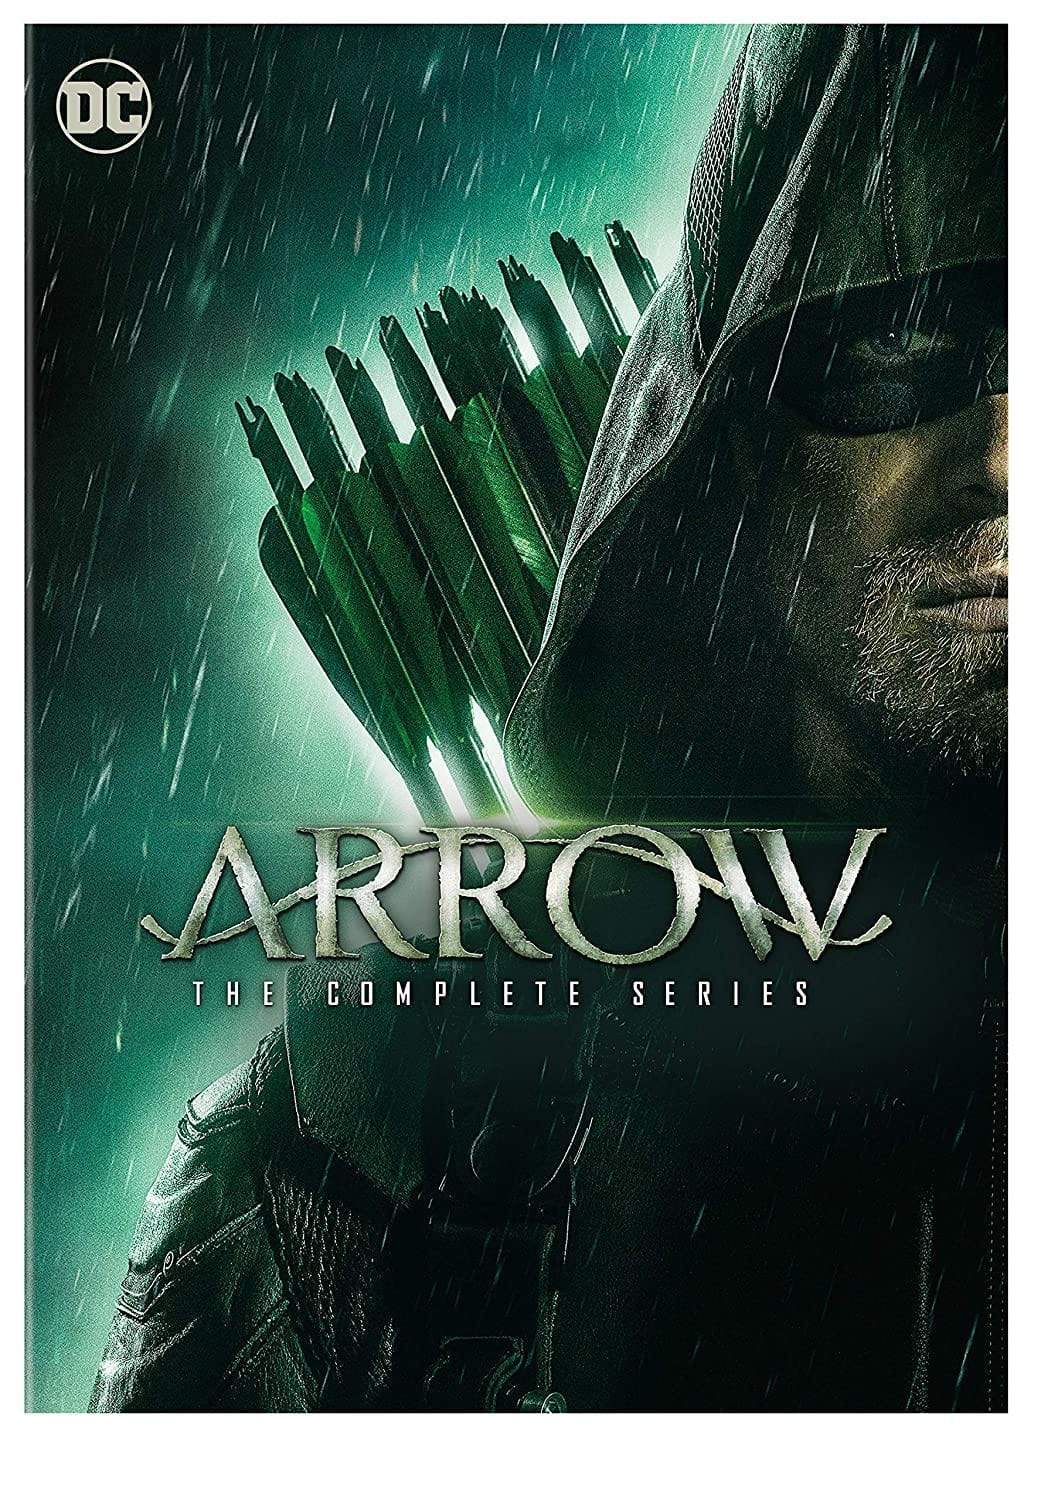 ARROW DVD Complete Series Set 20th Century Fox DVDs & Blu-ray Discs